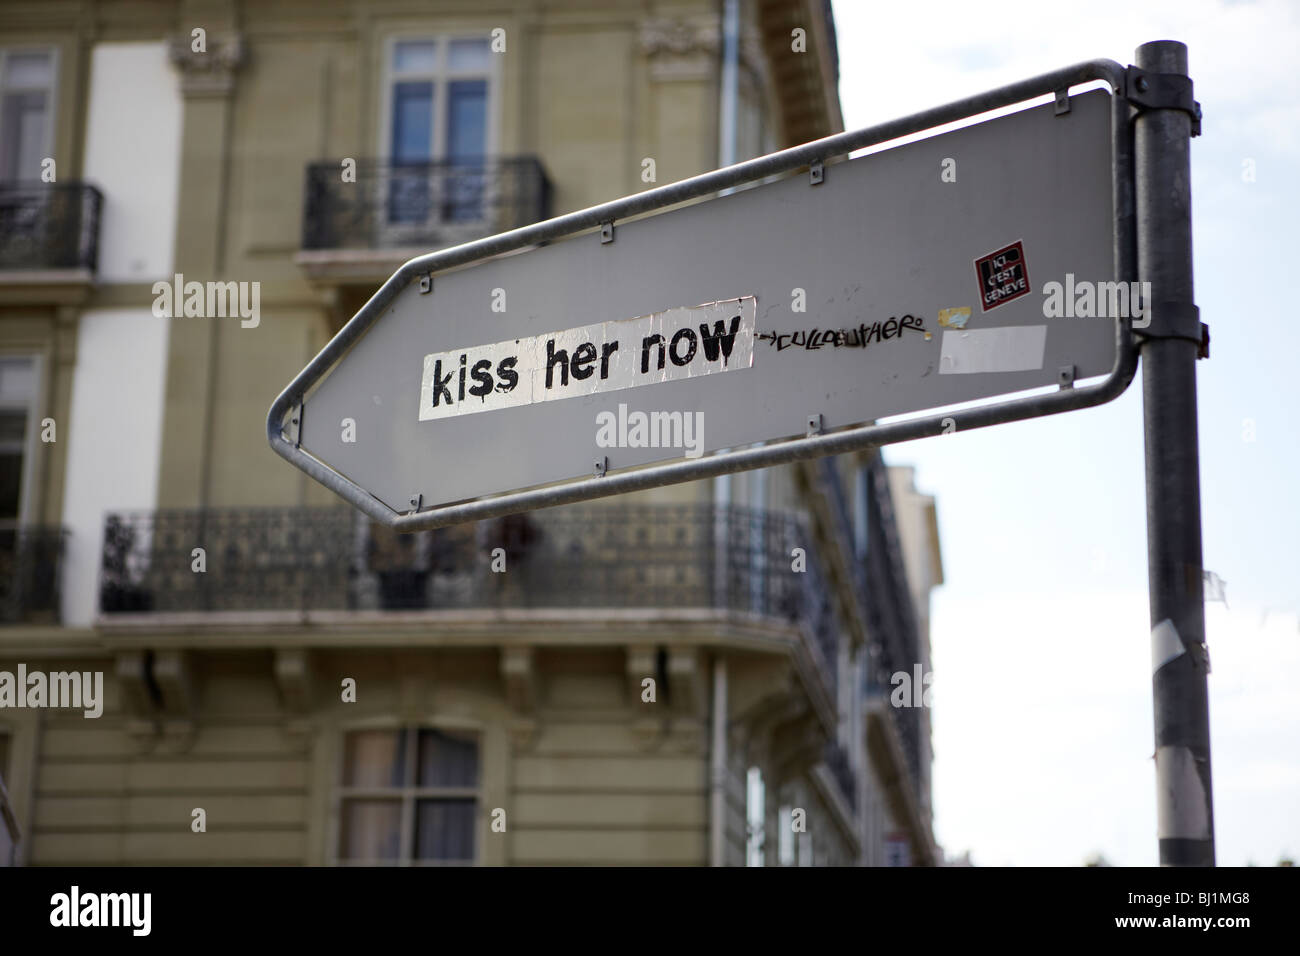 Kiss her now graffiti on the rear of a street sign, Geneva, Switzerland  Stock Photo - Alamy